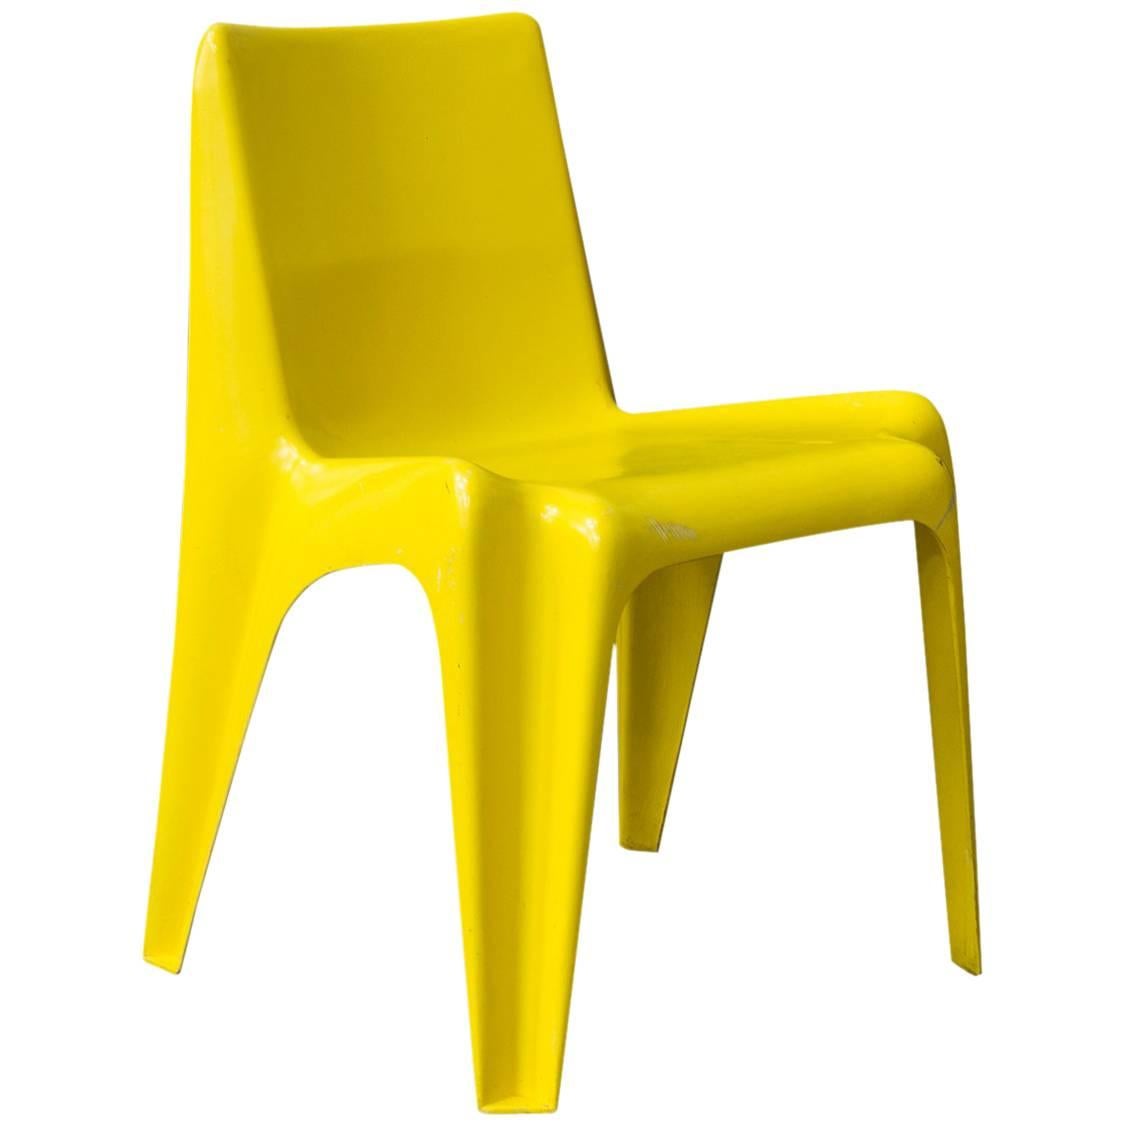 Rare Plastic Organic Chair in Yellow, circa 1970